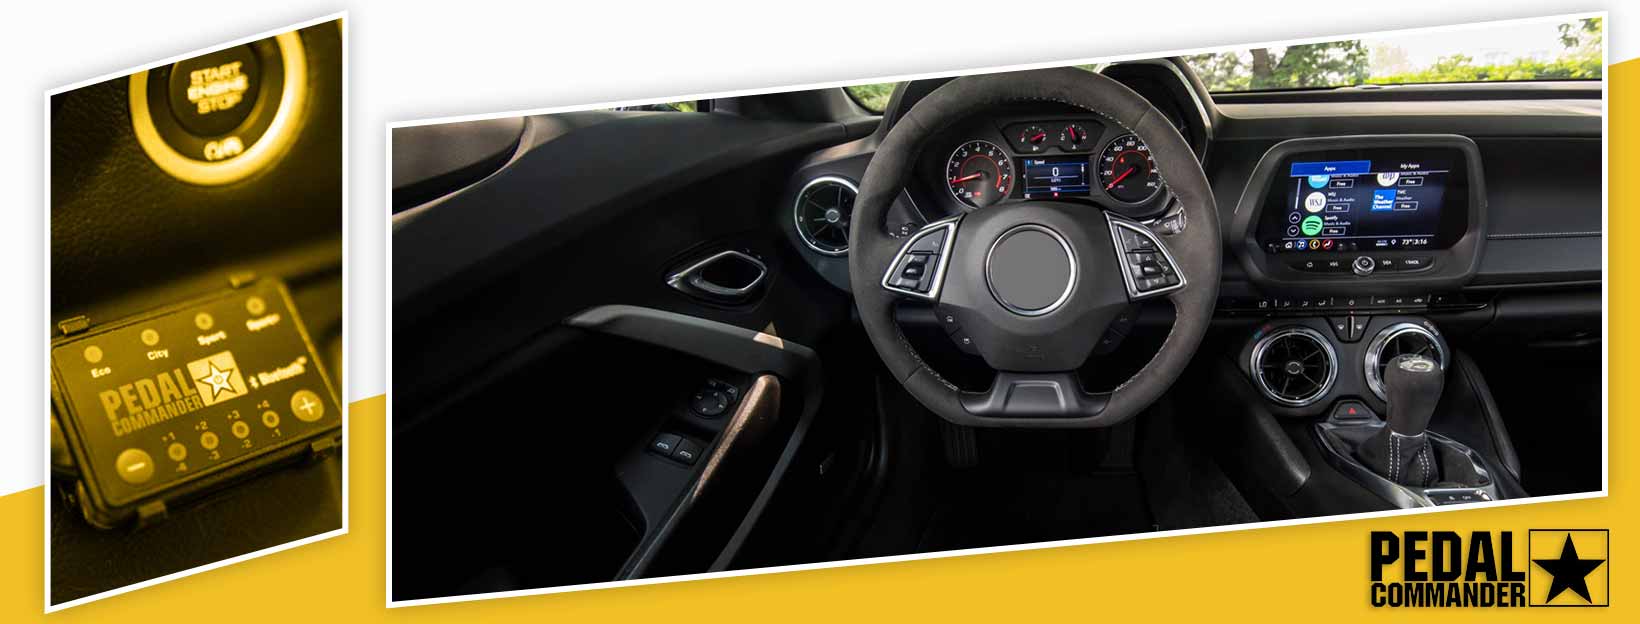 Pedal Commander for Chevrolet Camaro - interior